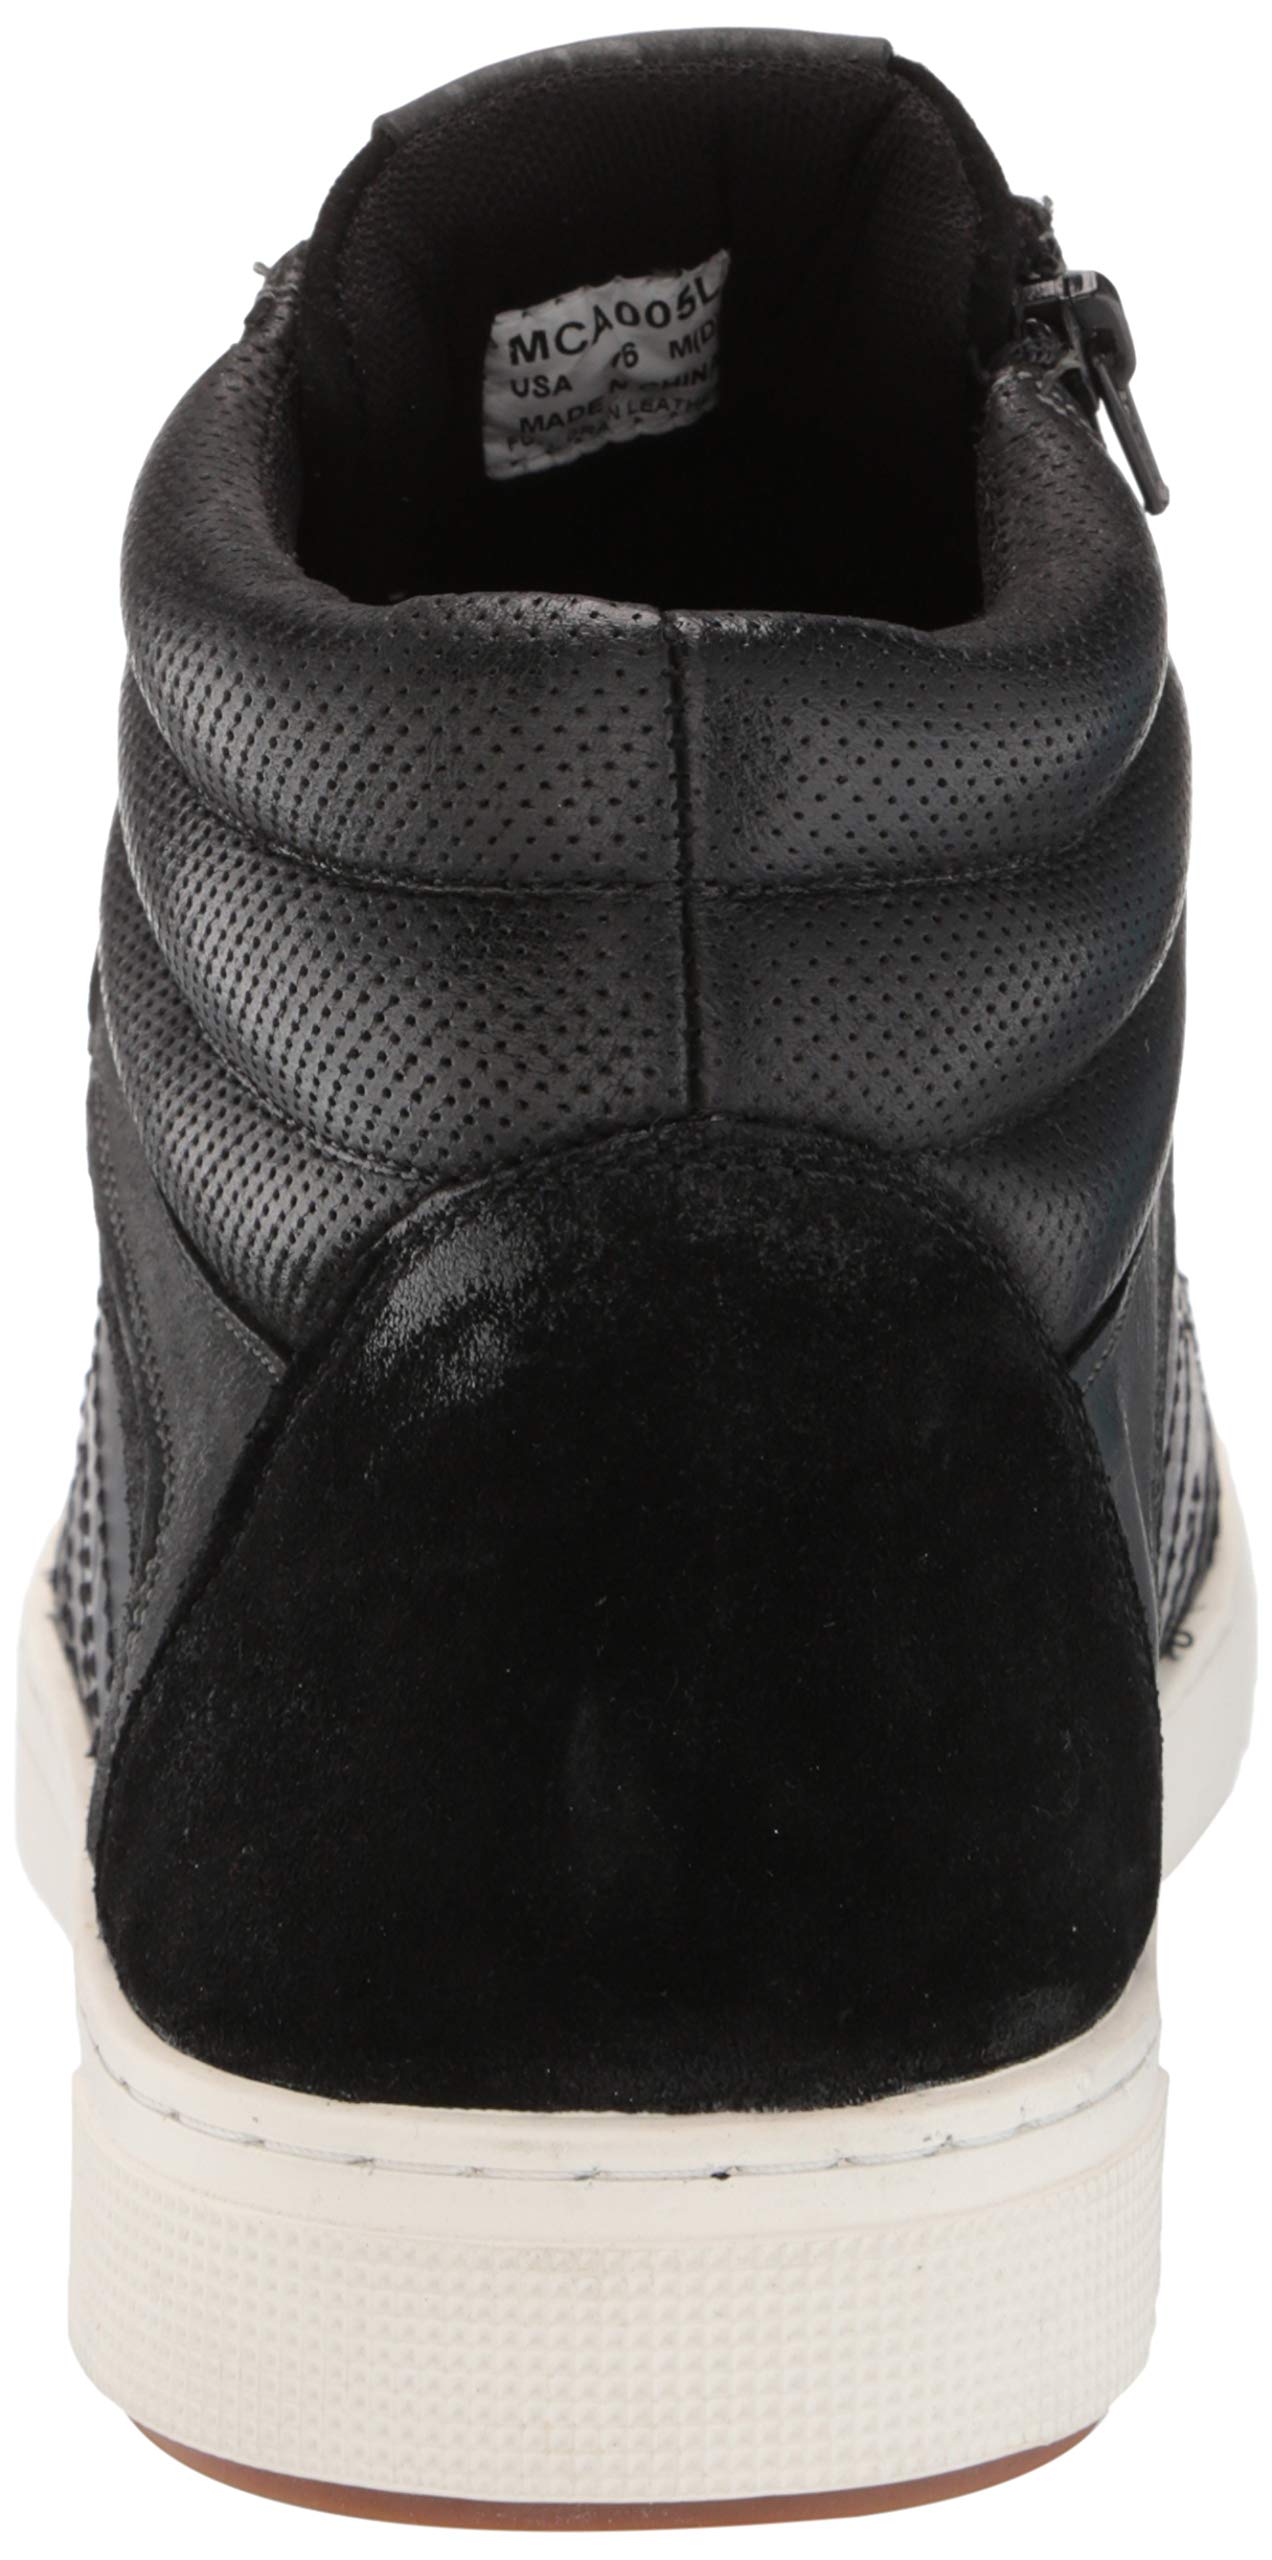 Propet Mens Kenton High Sneakers Casual Shoes Casual - Black